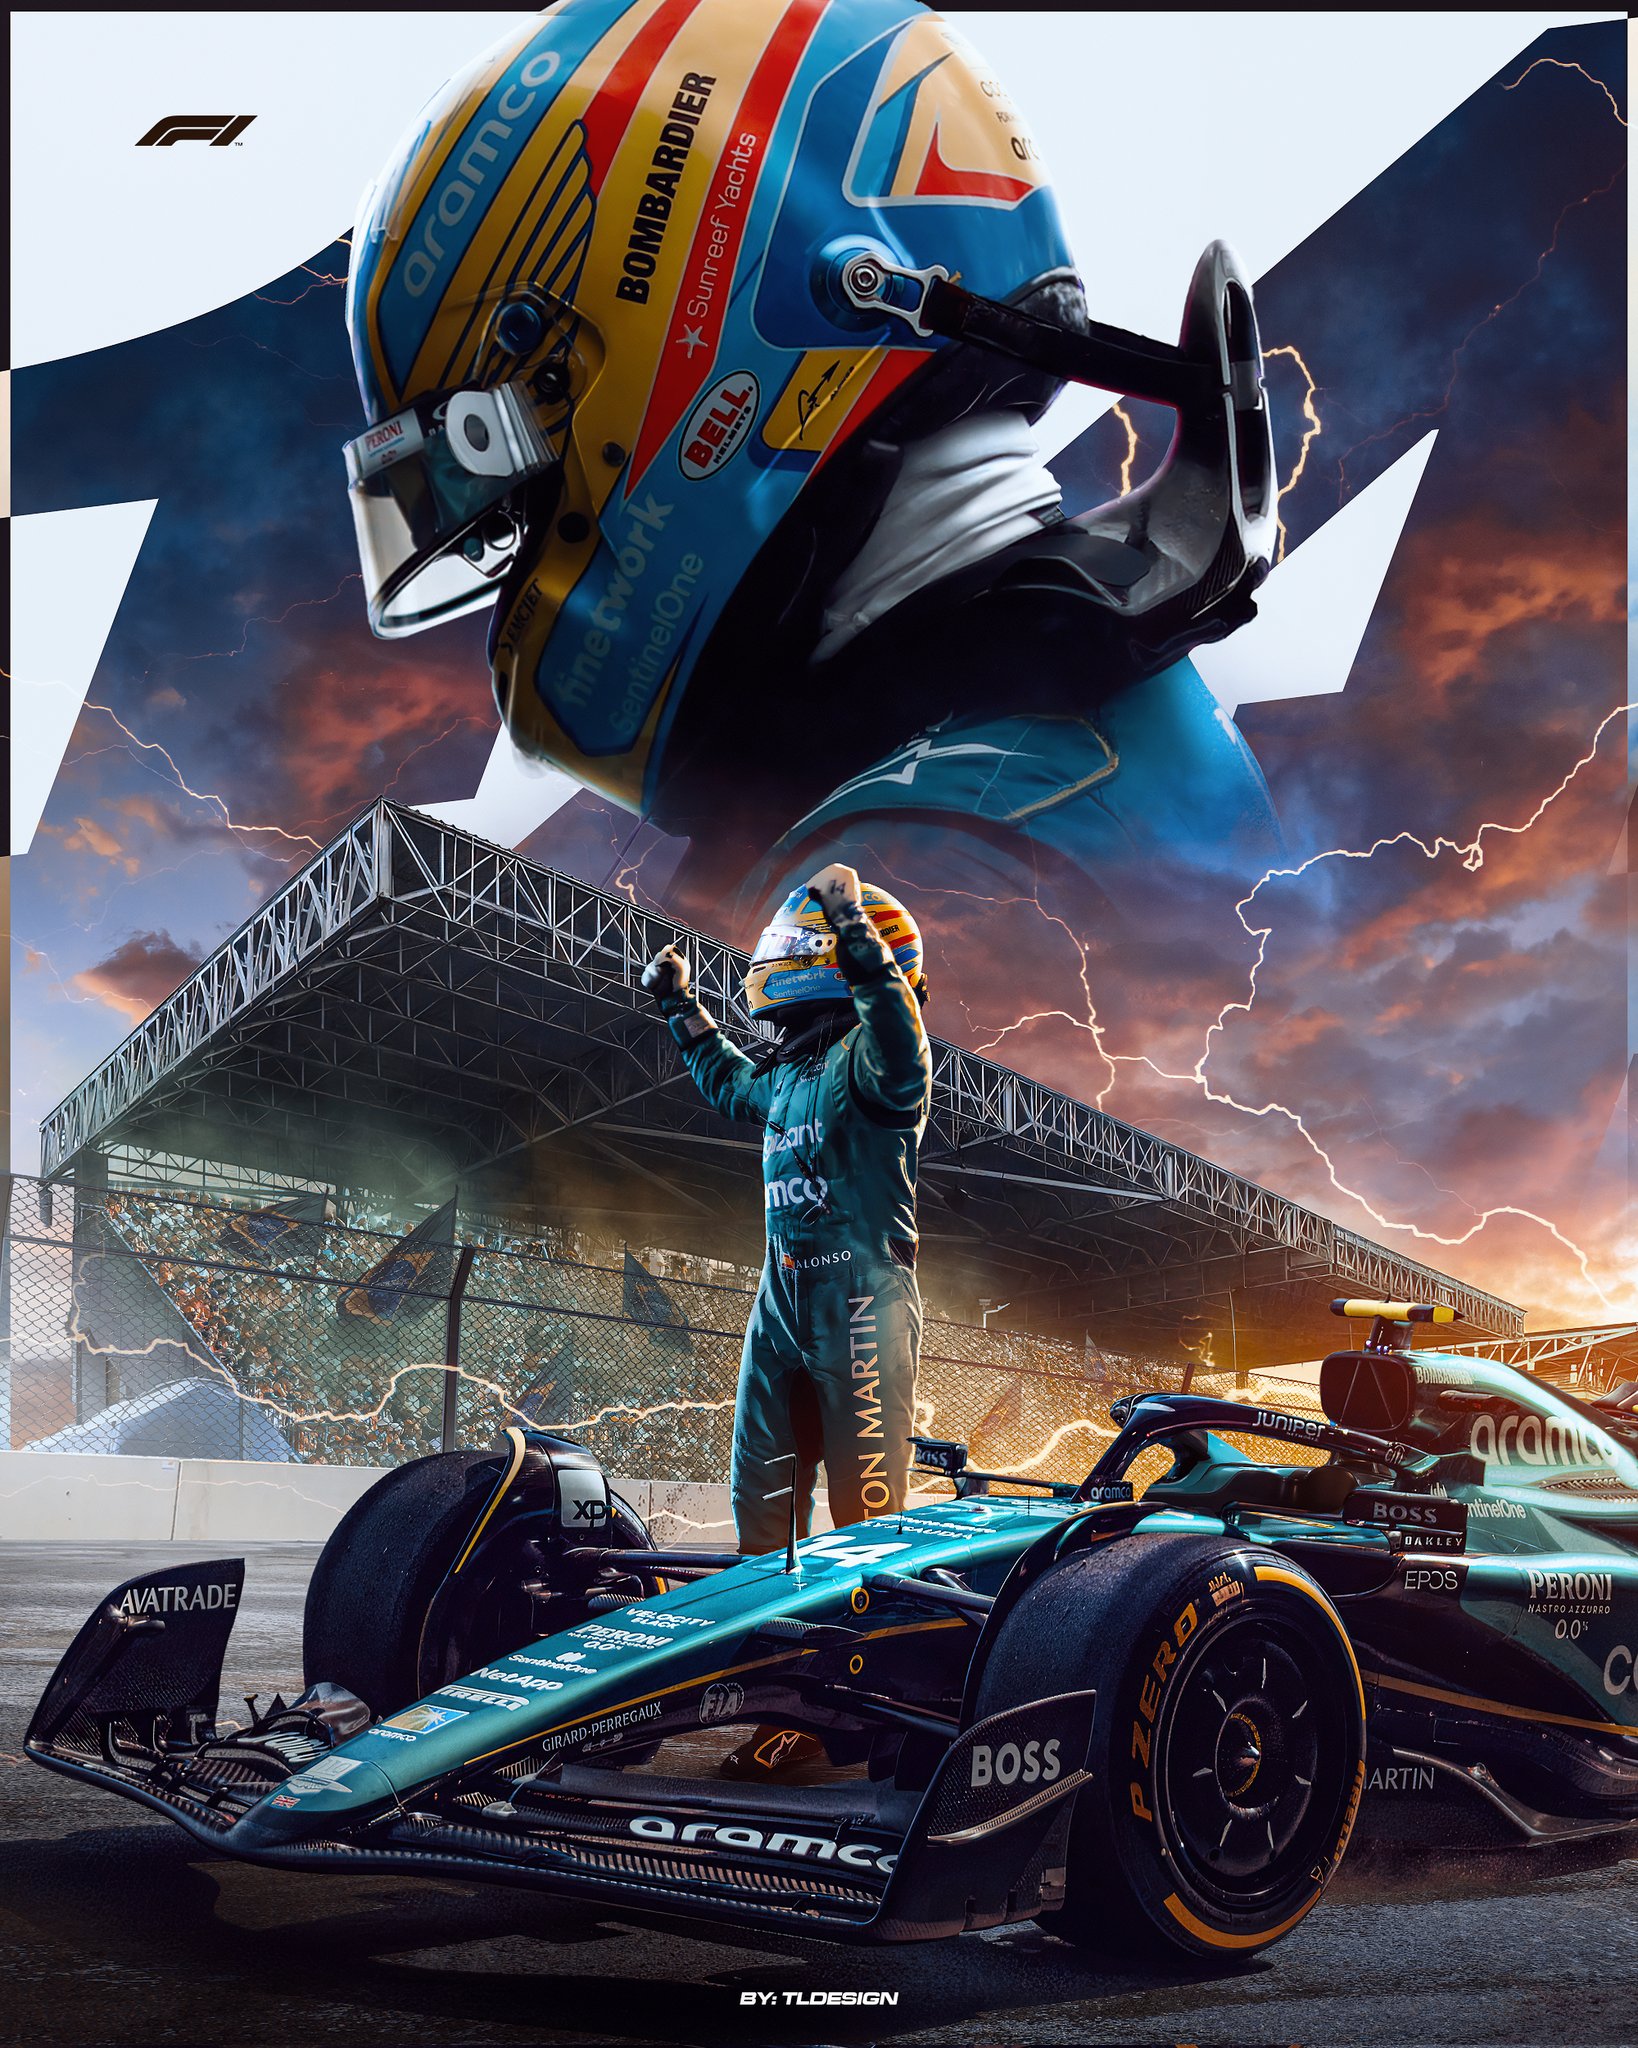 Tl Design on X: Fernando Alonso #BrazilGP poster 🇧🇷🎨 #FA14 #AstonMartin  #F1 #Formula1  / X